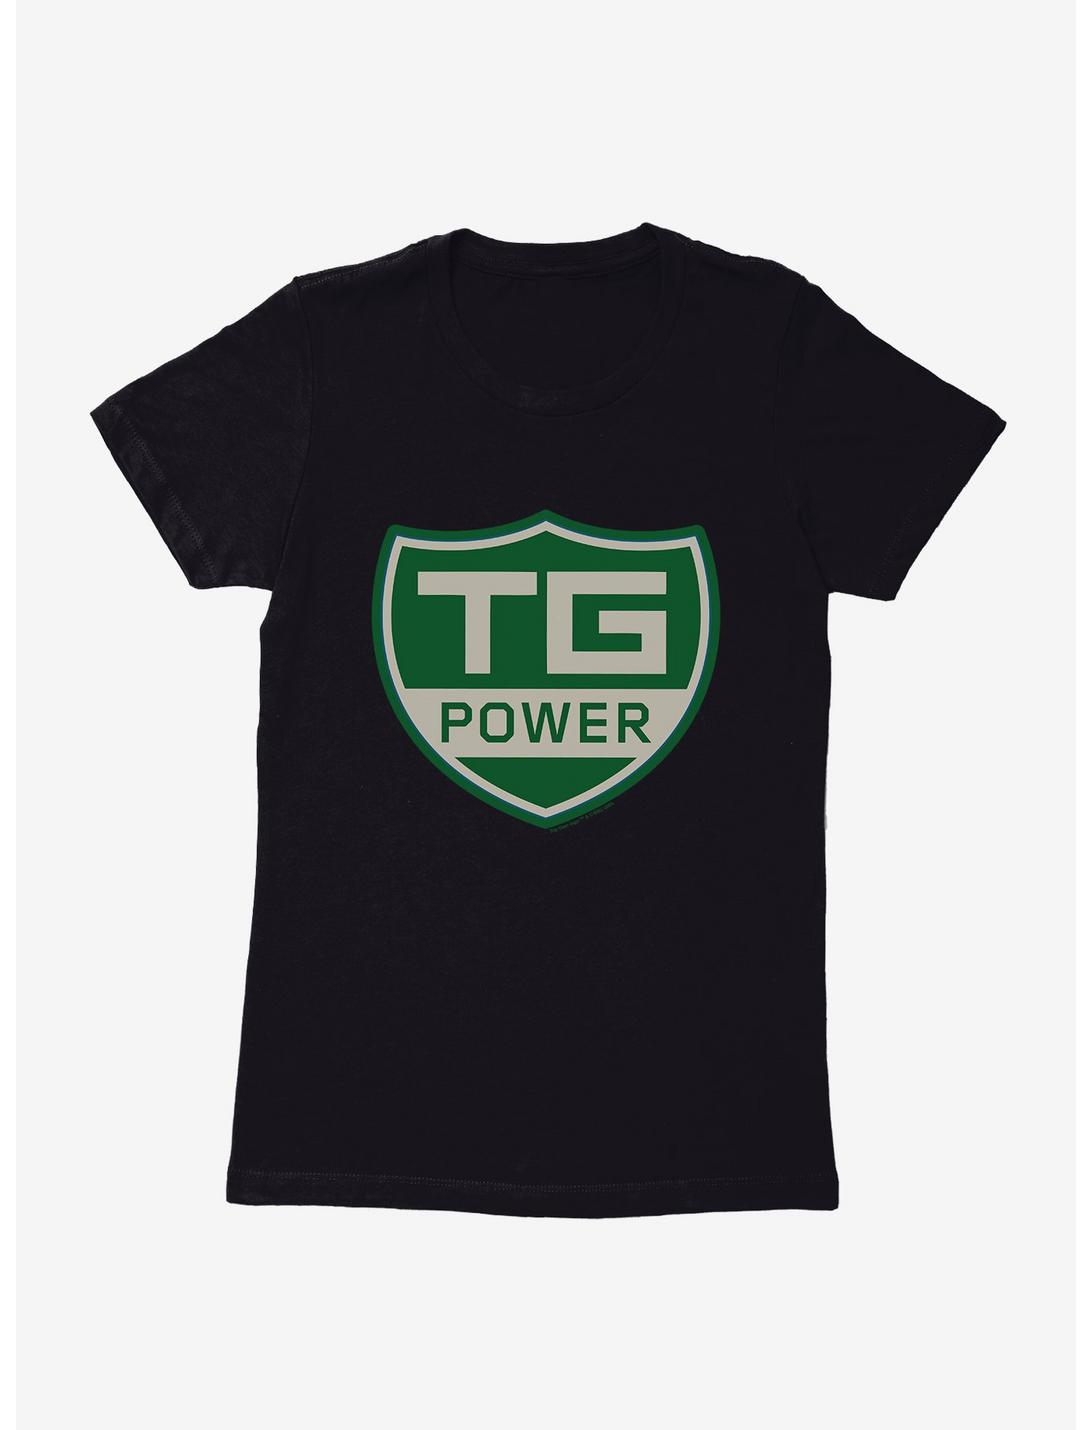 Top Gear TG Power Sign Womens T-Shirt, , hi-res